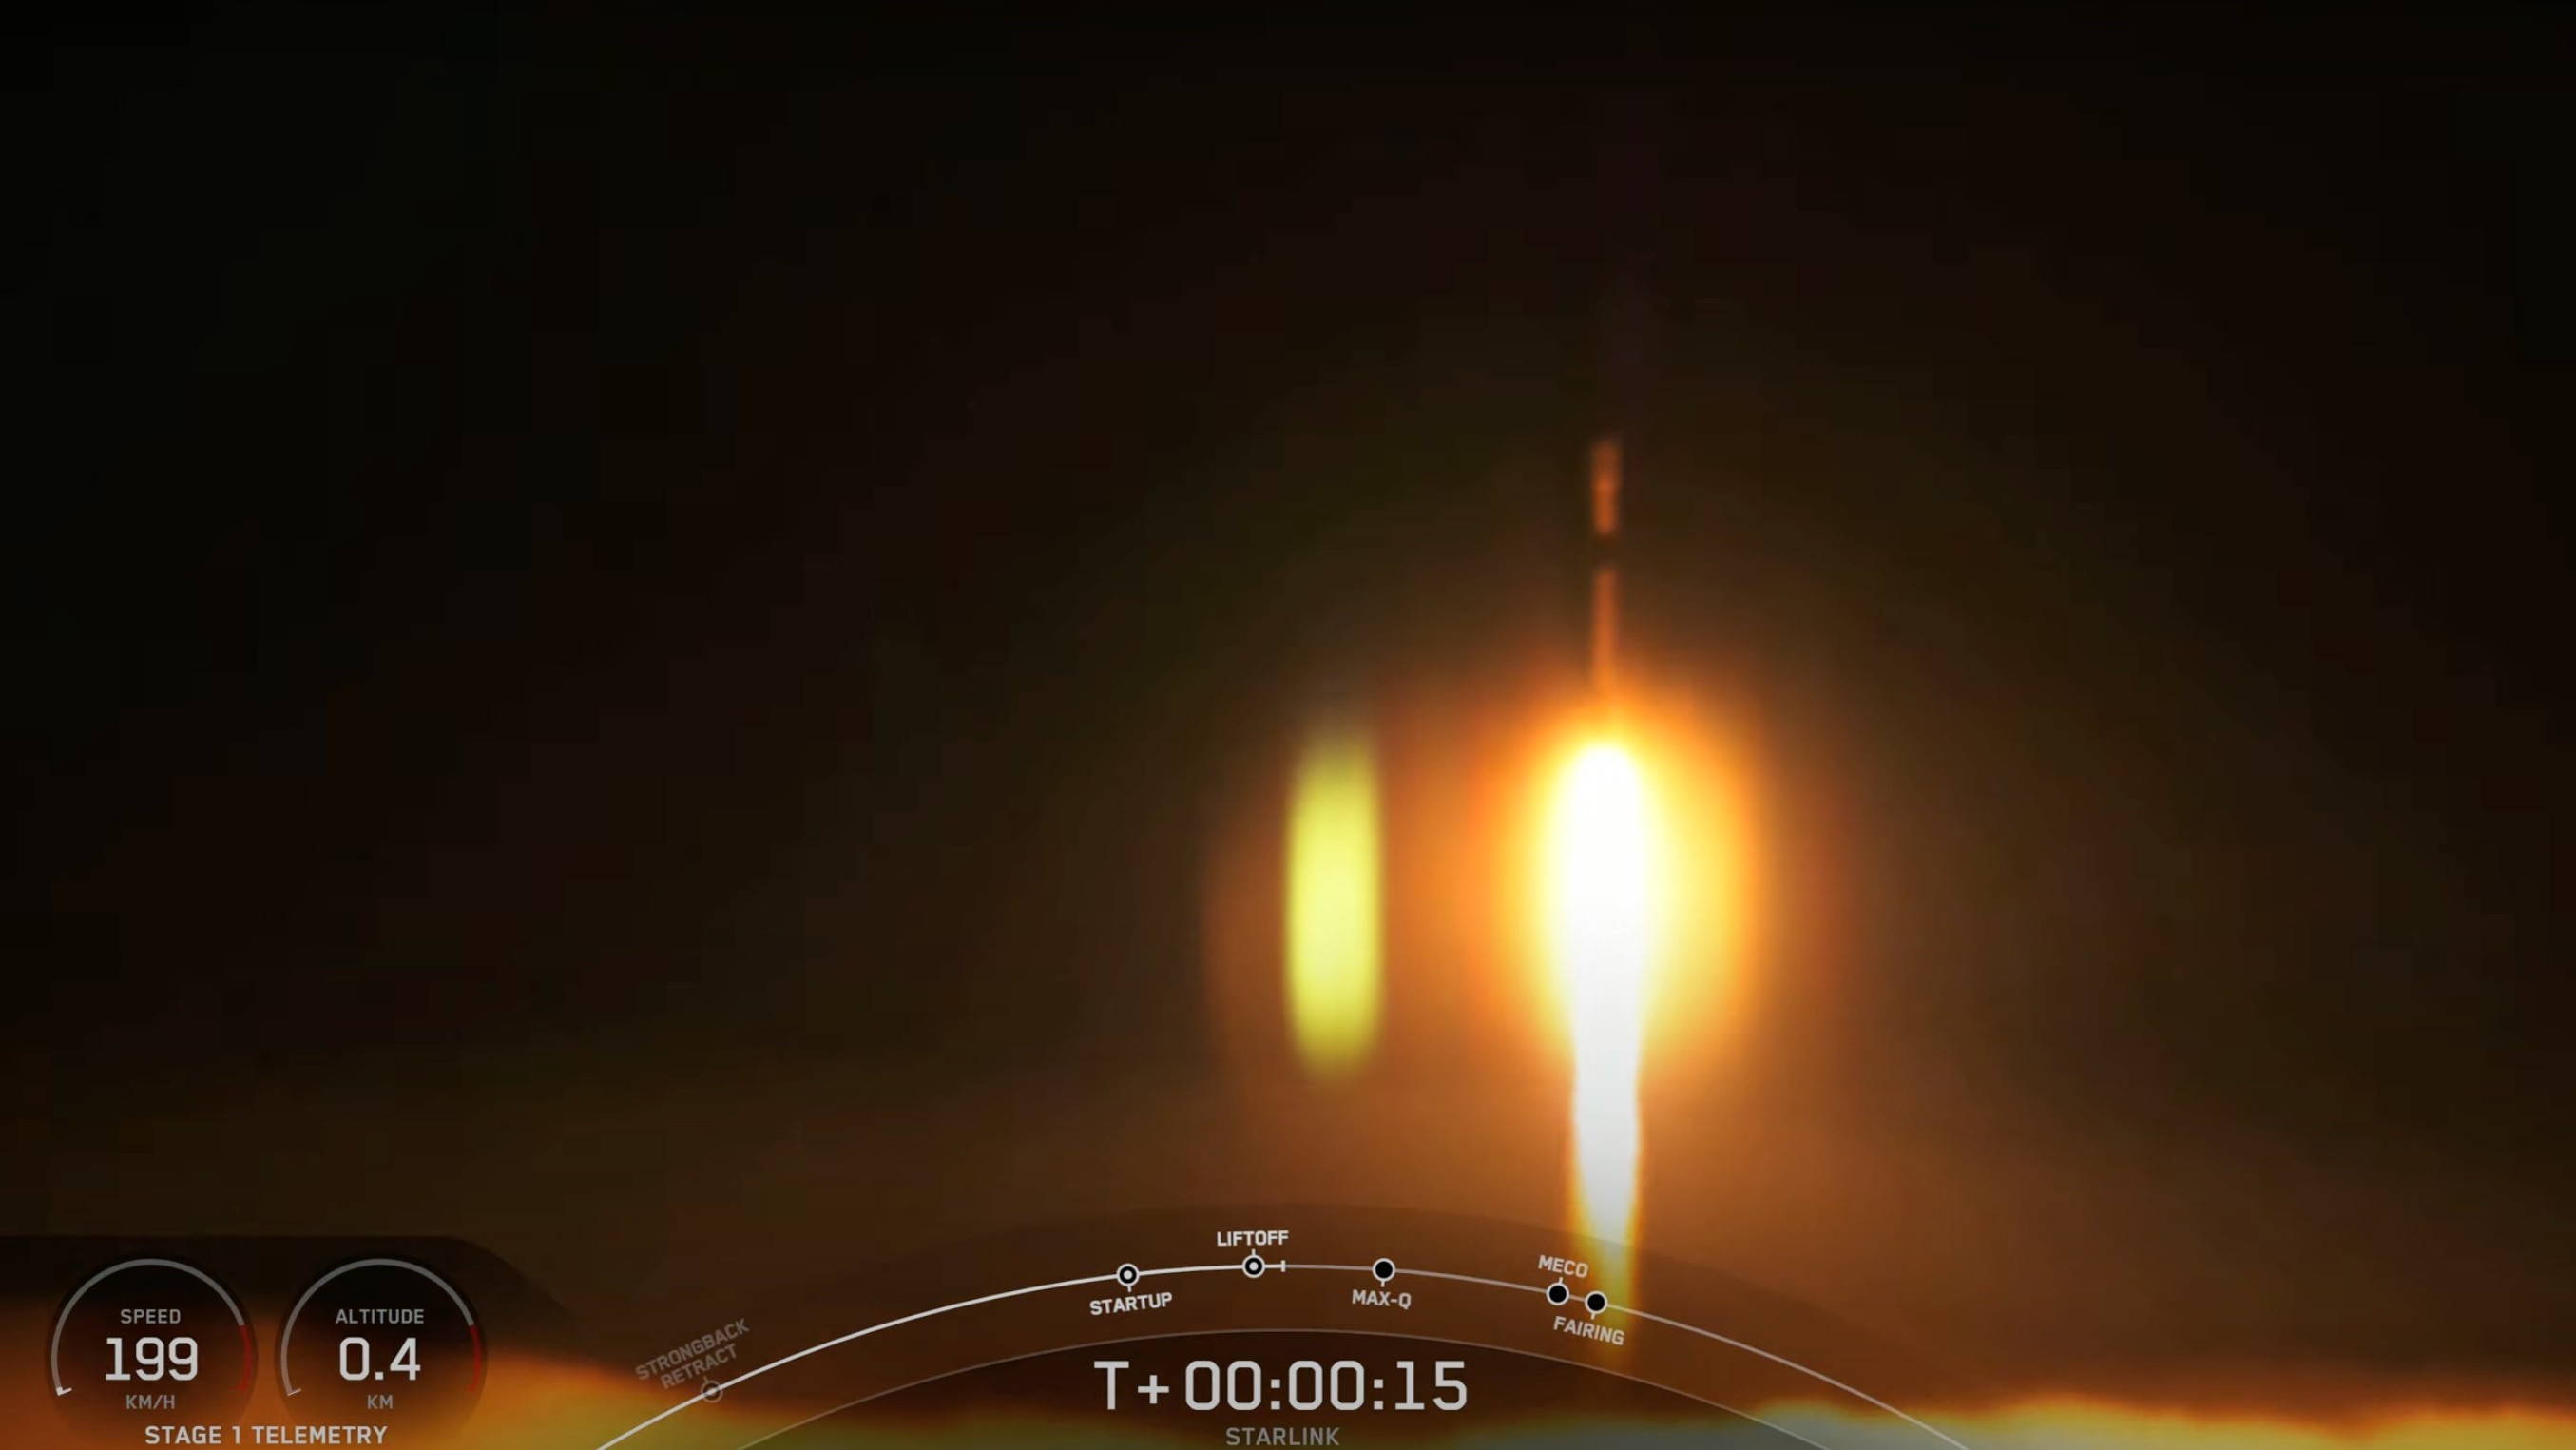 SpaceX's Falcon 9 rocket launch colors Sedona's sky - Sedona Red